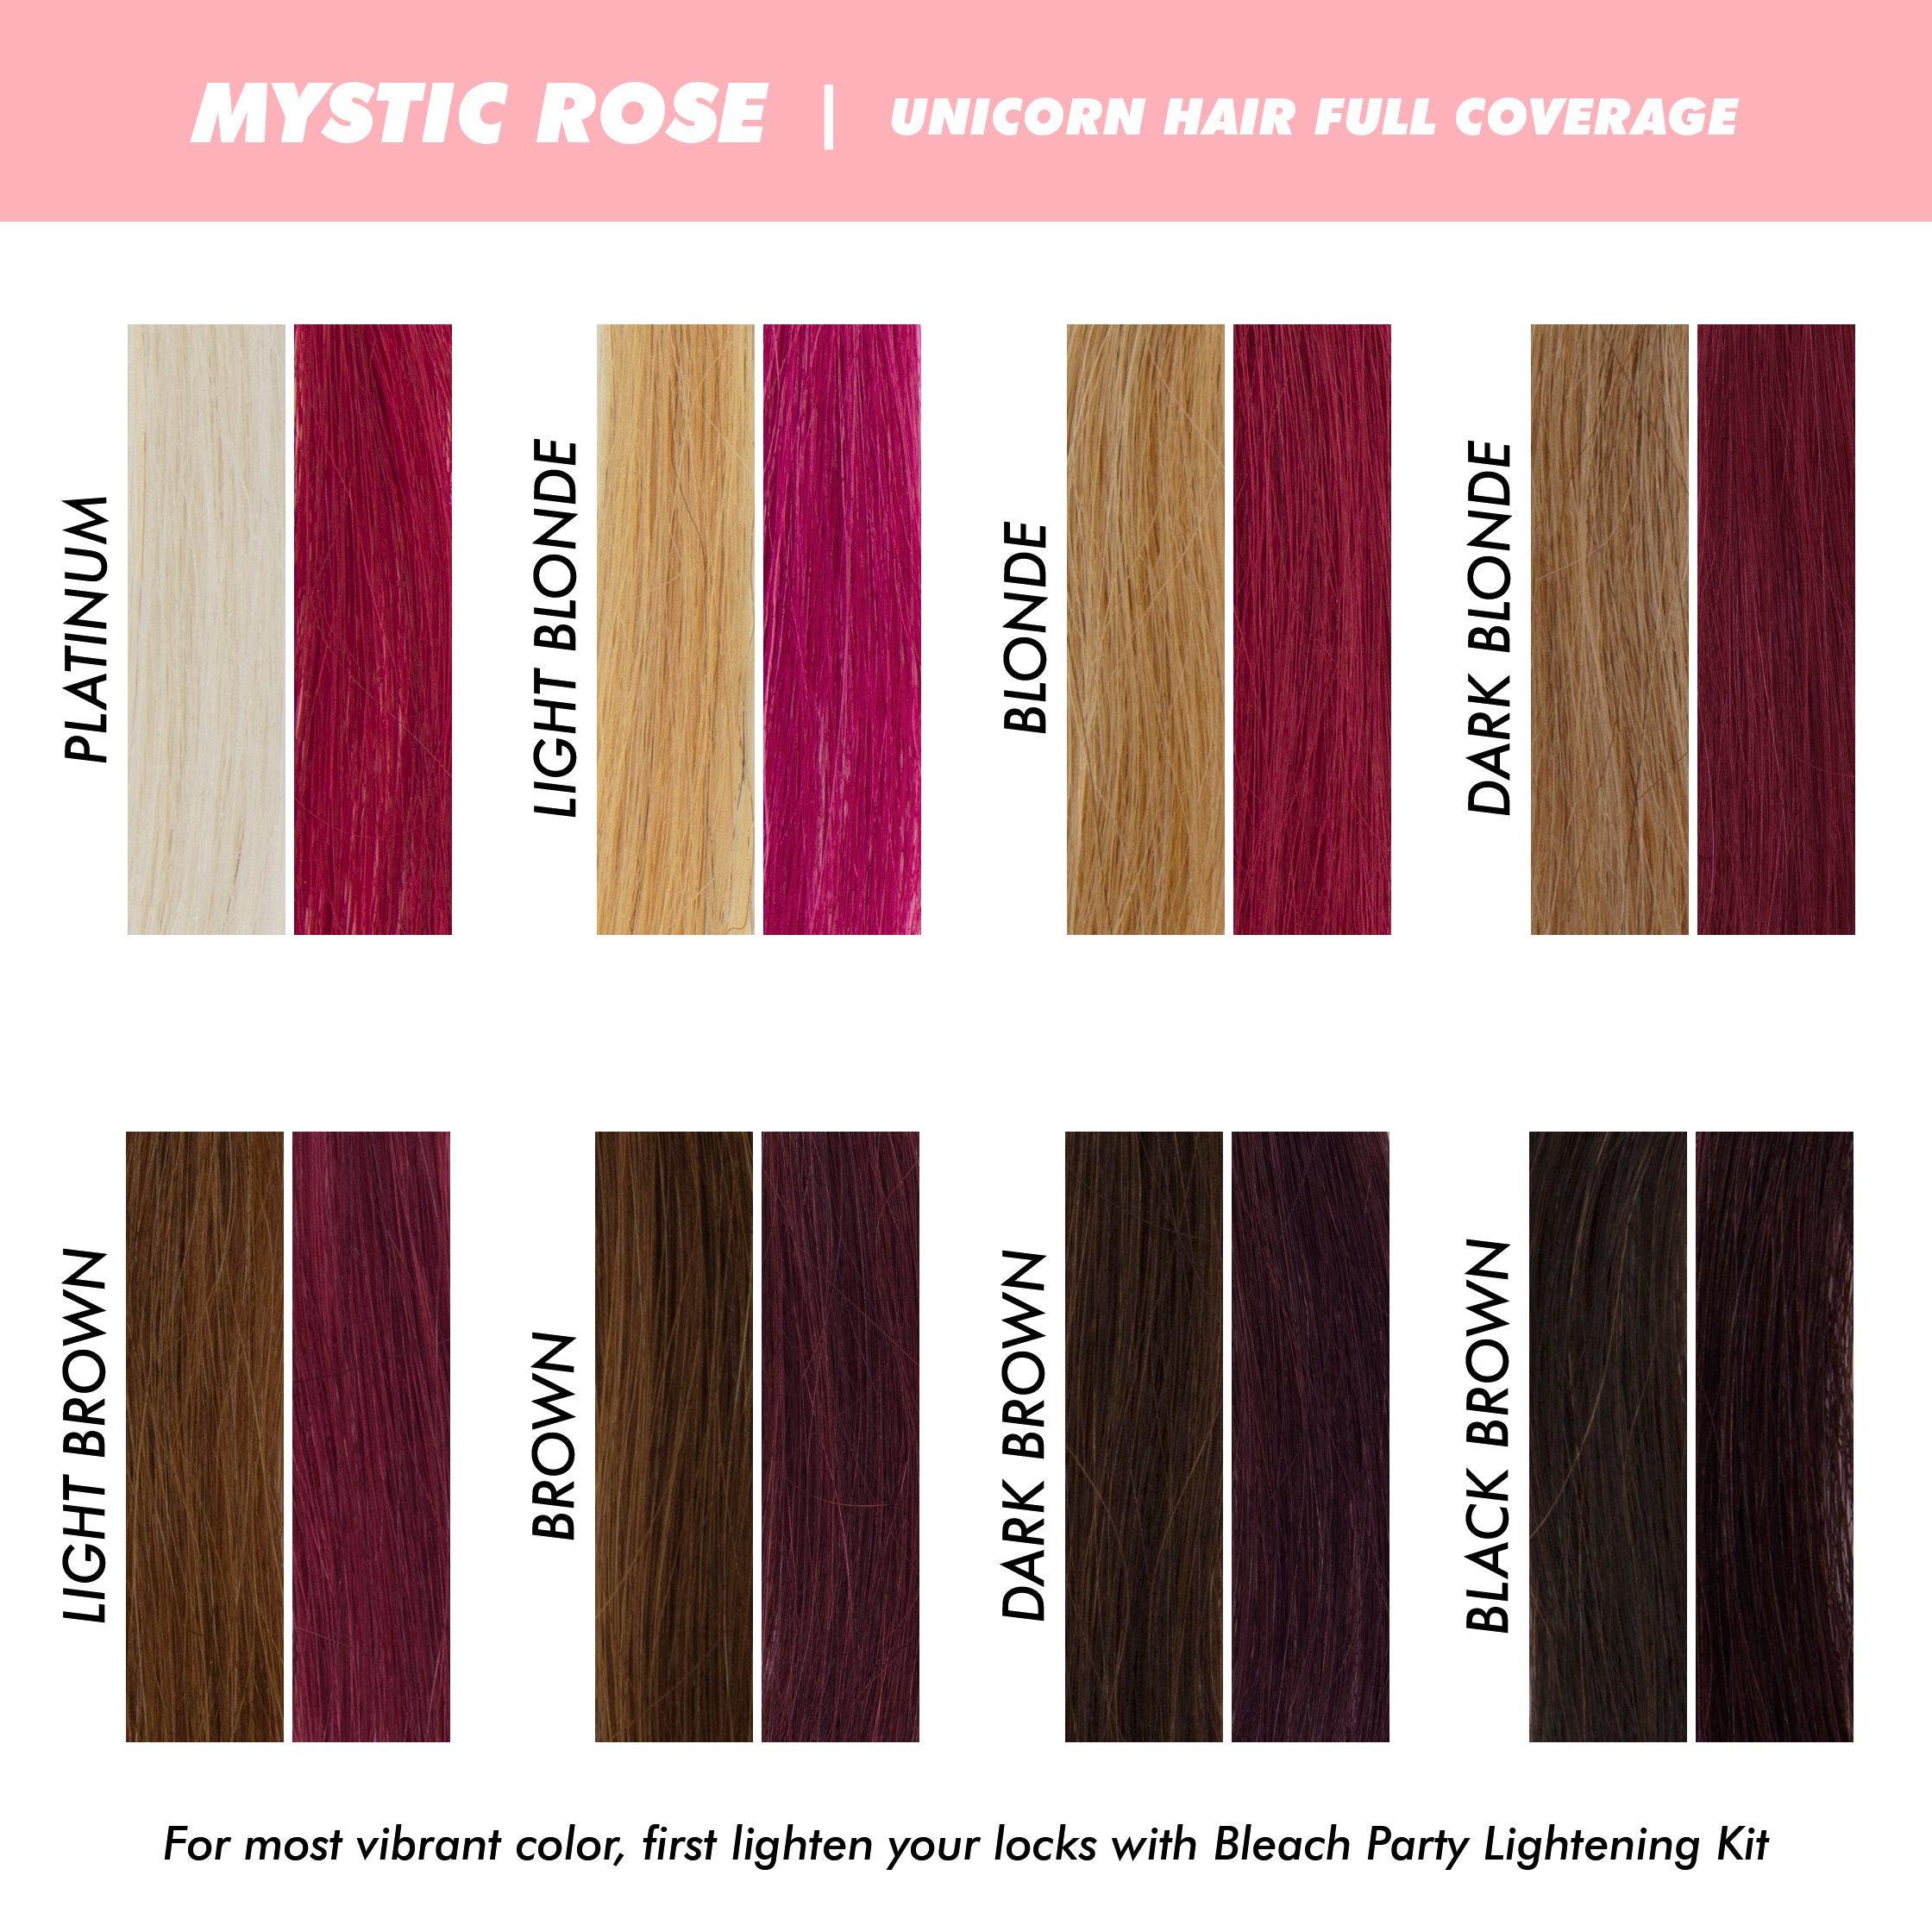 Unicorn Hair Full Coverage variant:Mystic Rose